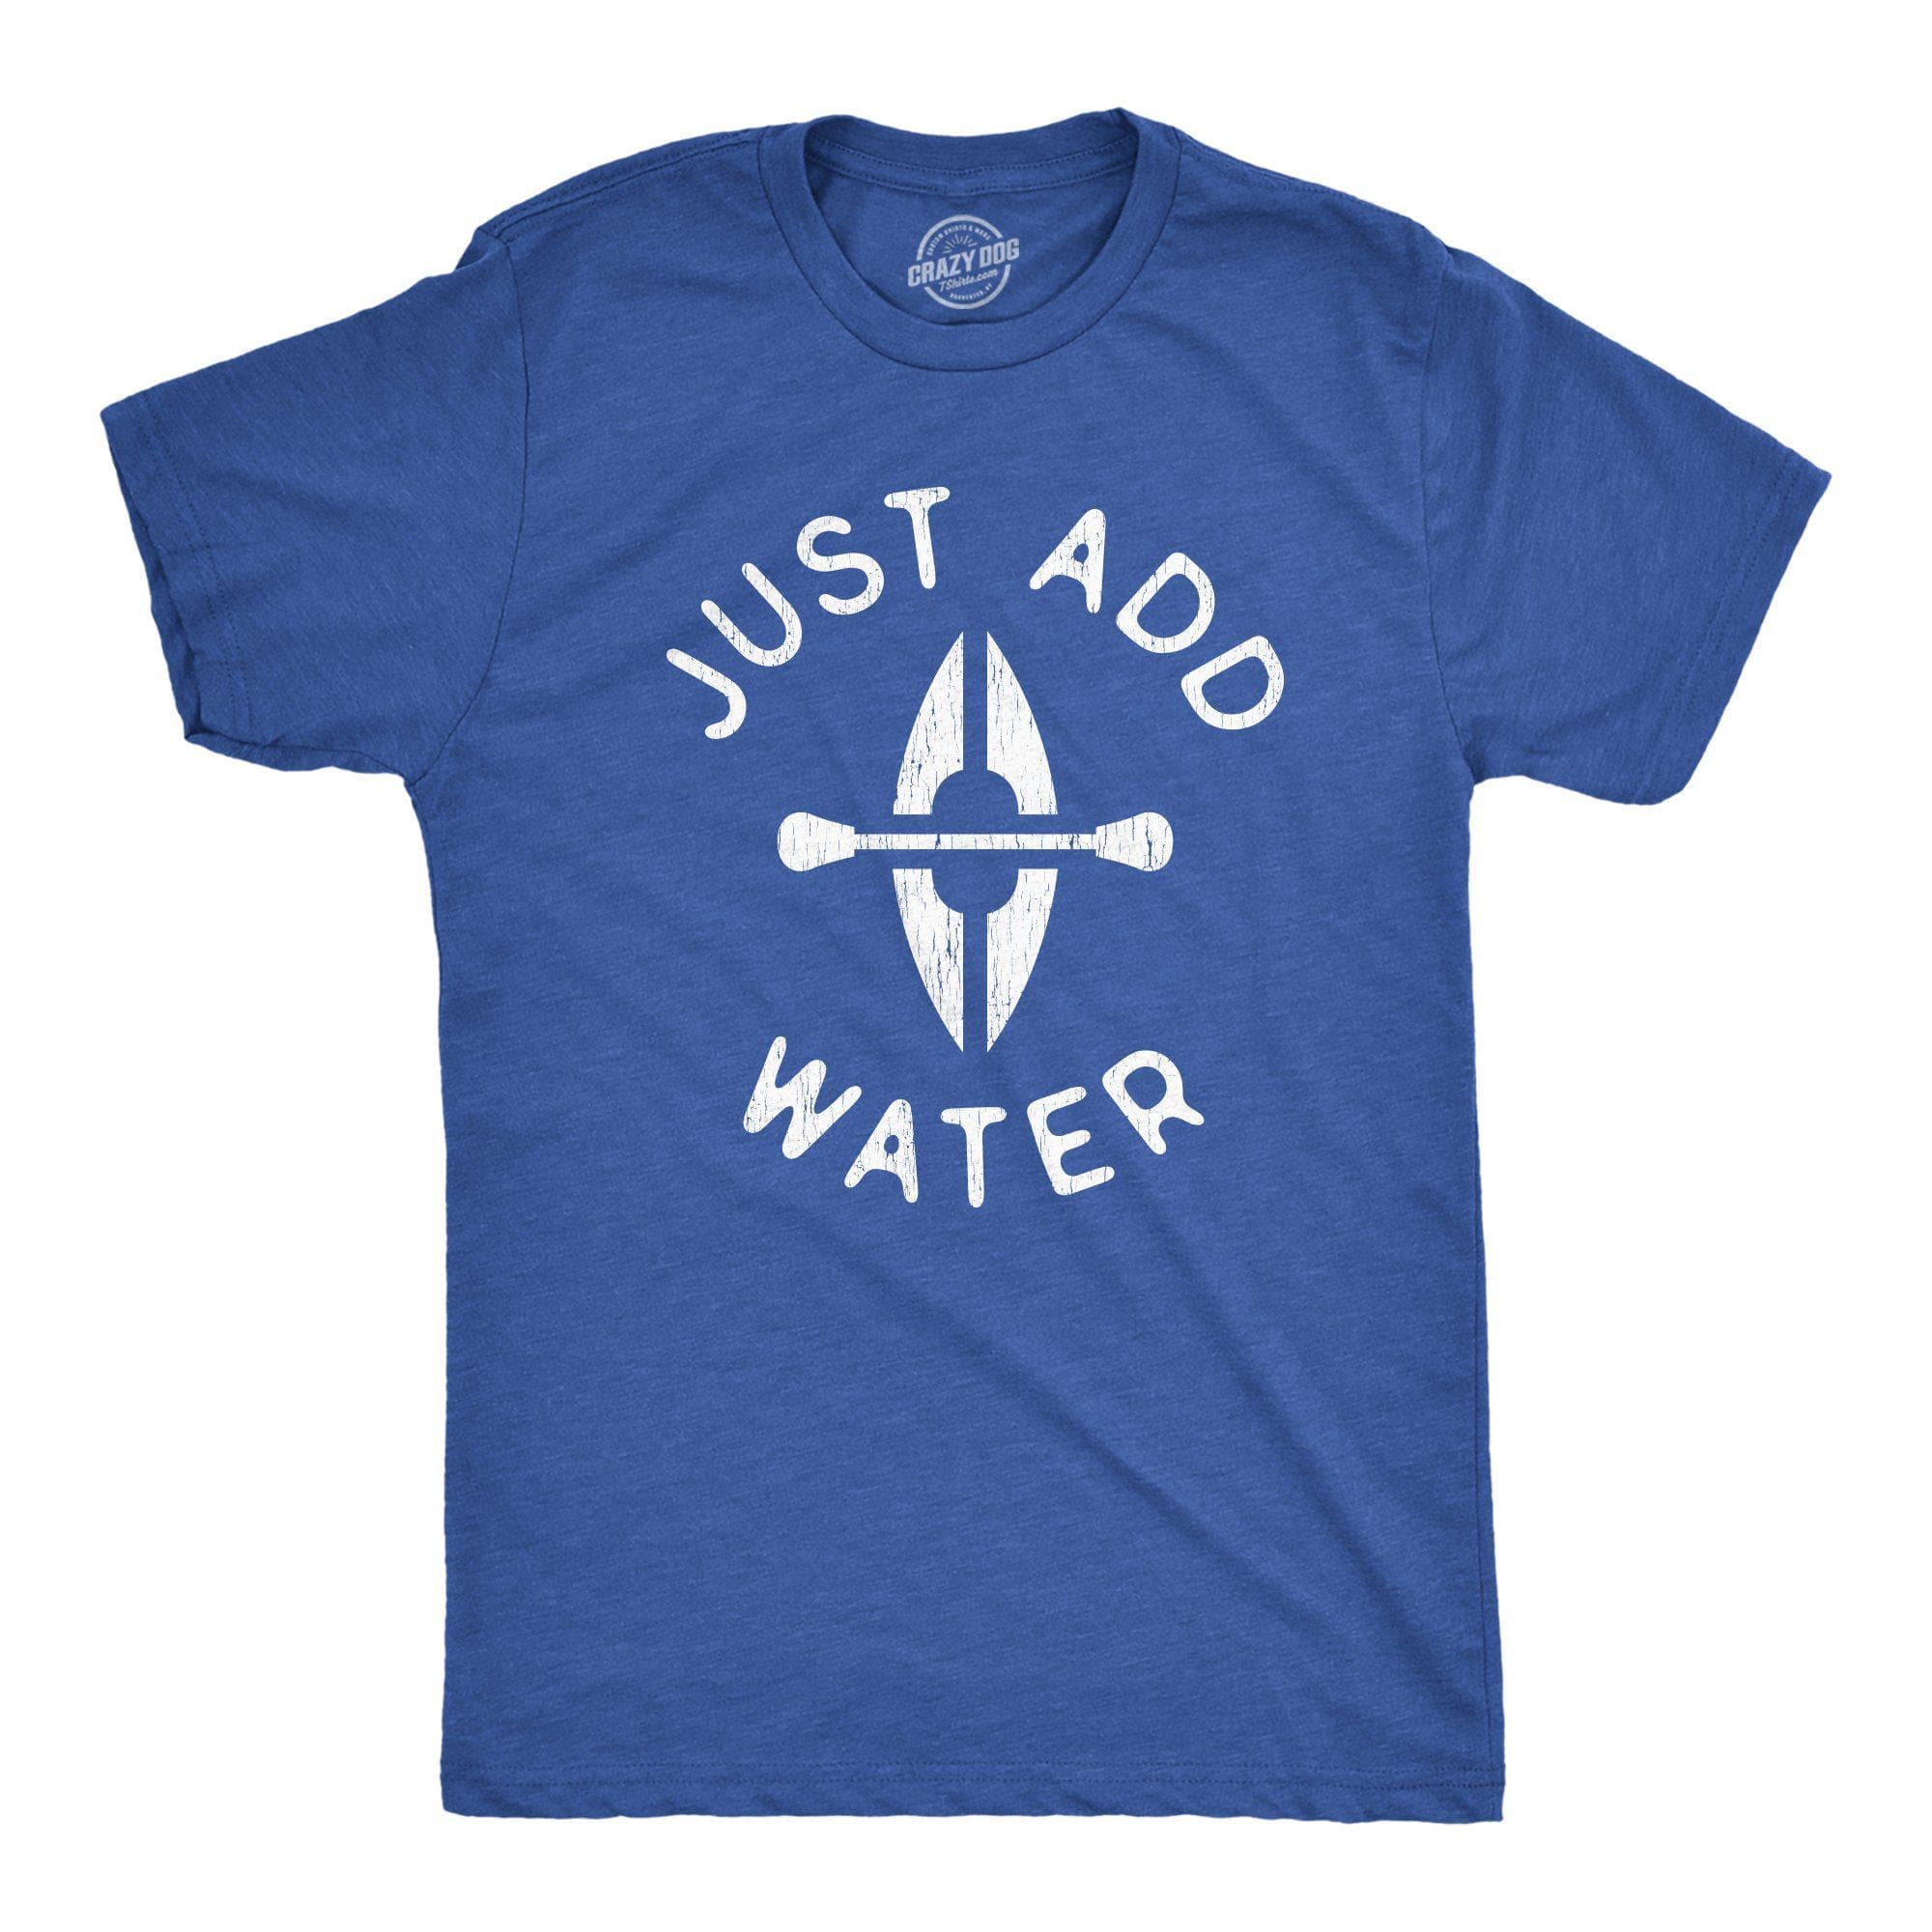 Just Add Water Men's Tshirt - Crazy Dog T-Shirts